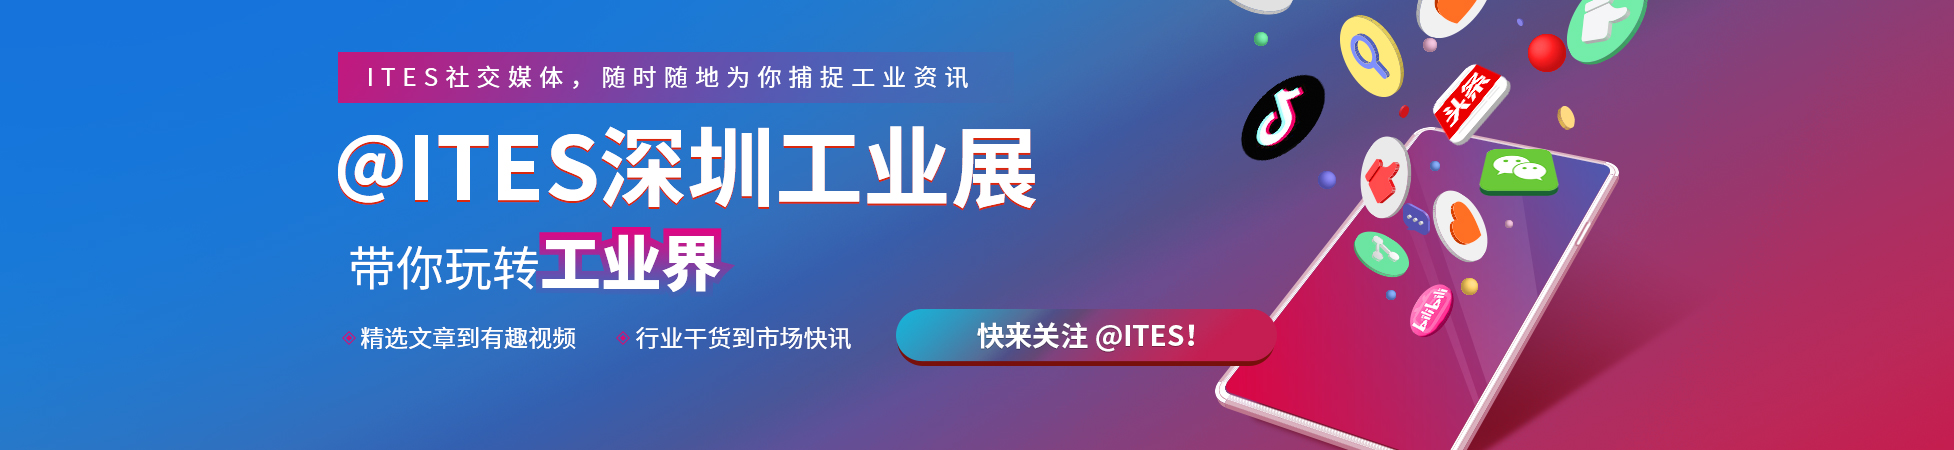 ITES深圳工业展-快来关注@ITES深圳工业展吧